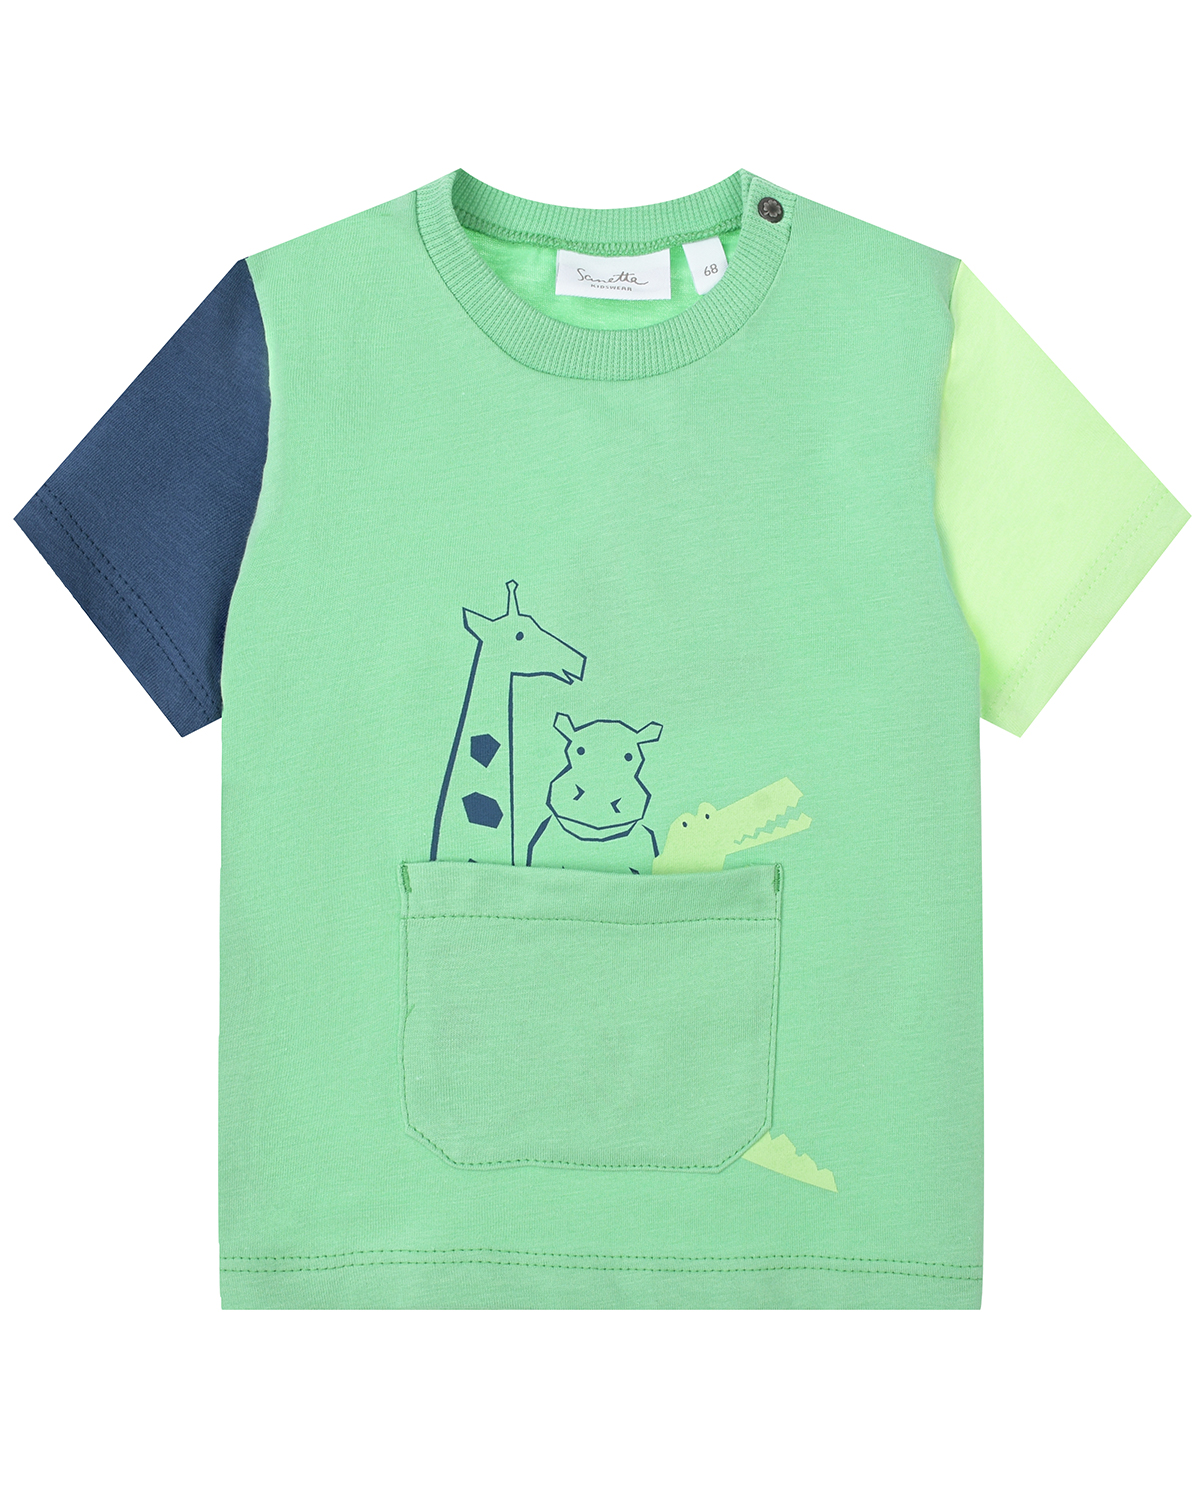 Зеленая футболка с накладным карманом Sanetta Kidswear розовая толстовка с принтом белки sanetta kidswear детская